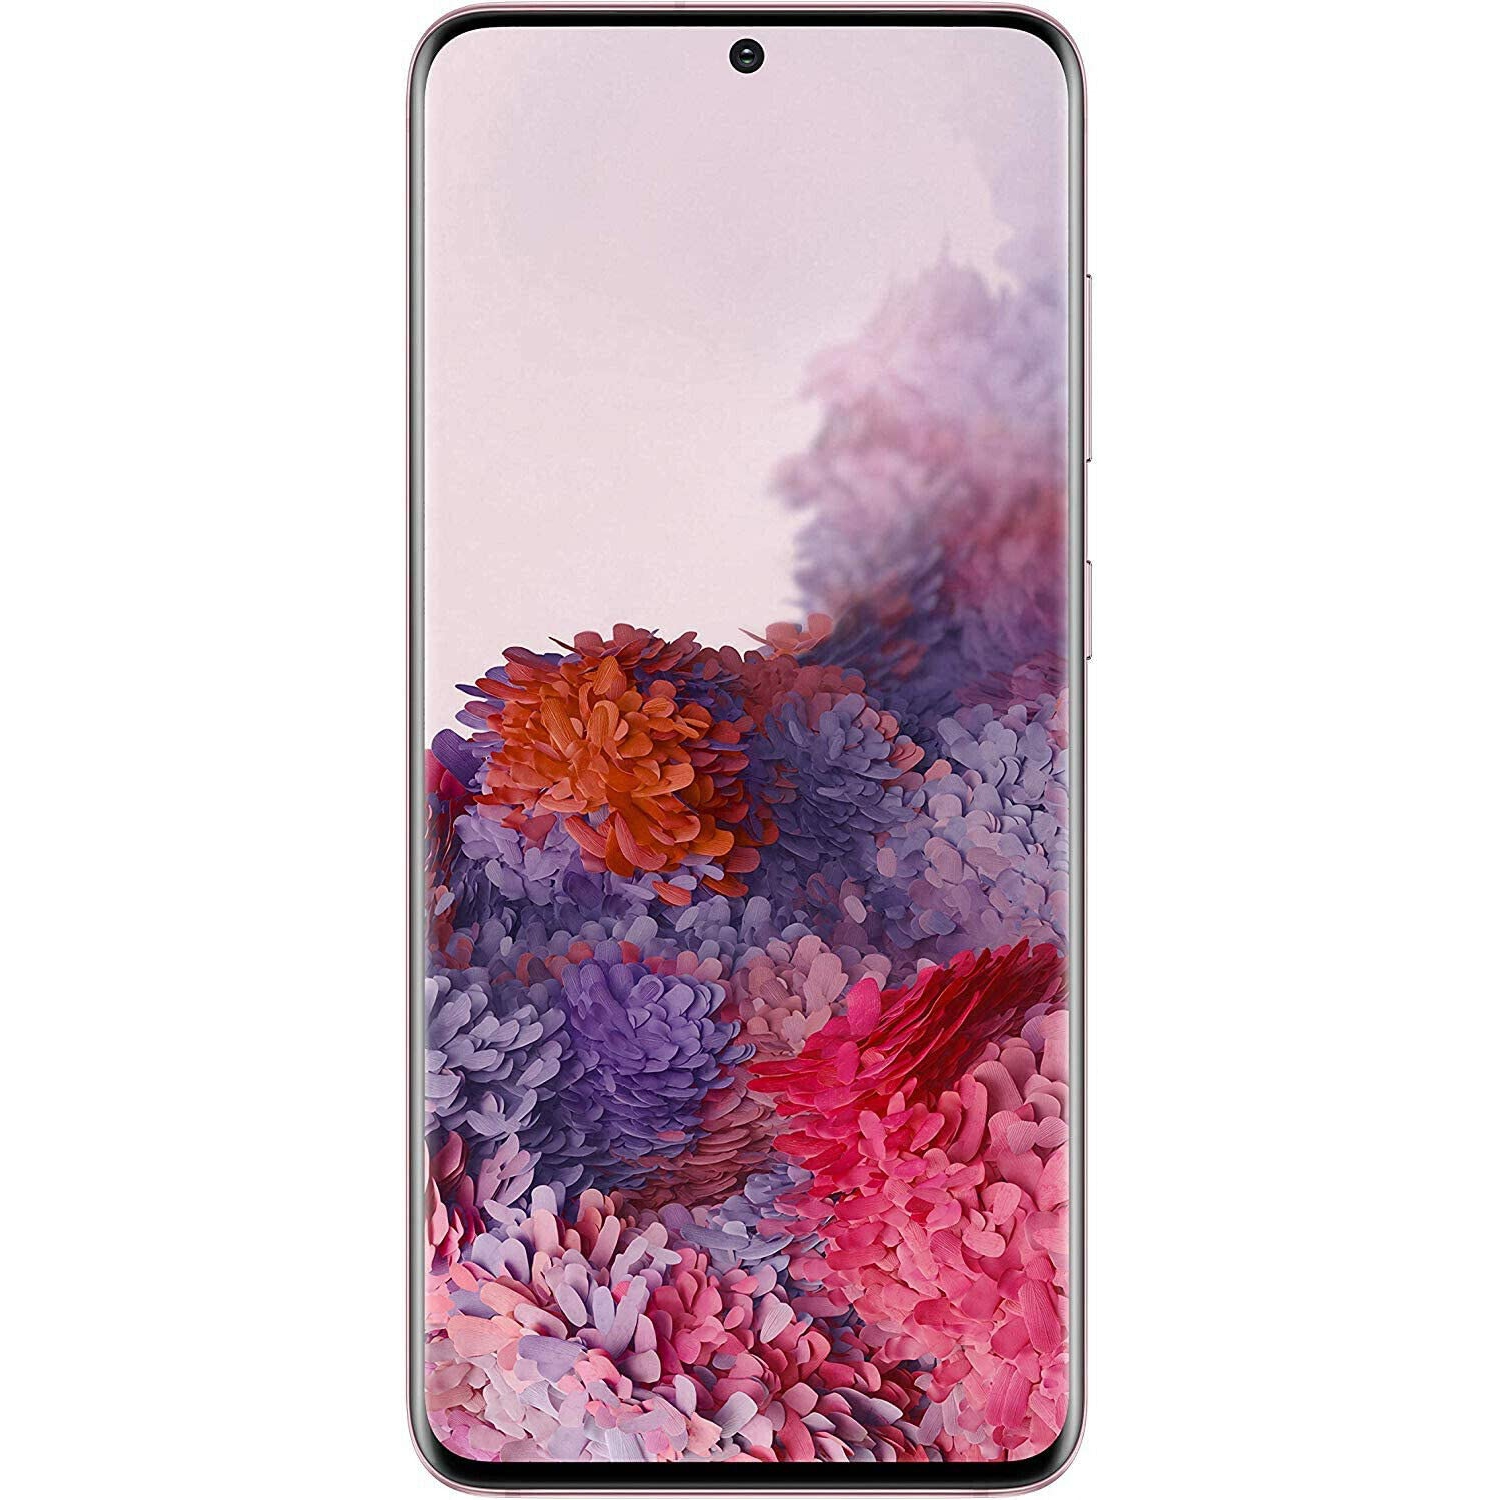 Refurbished (Excellent) - Samsung Galaxy S20 5G 128GB Smartphone - Cloud Pink - Unlocked - Certified Refurbished